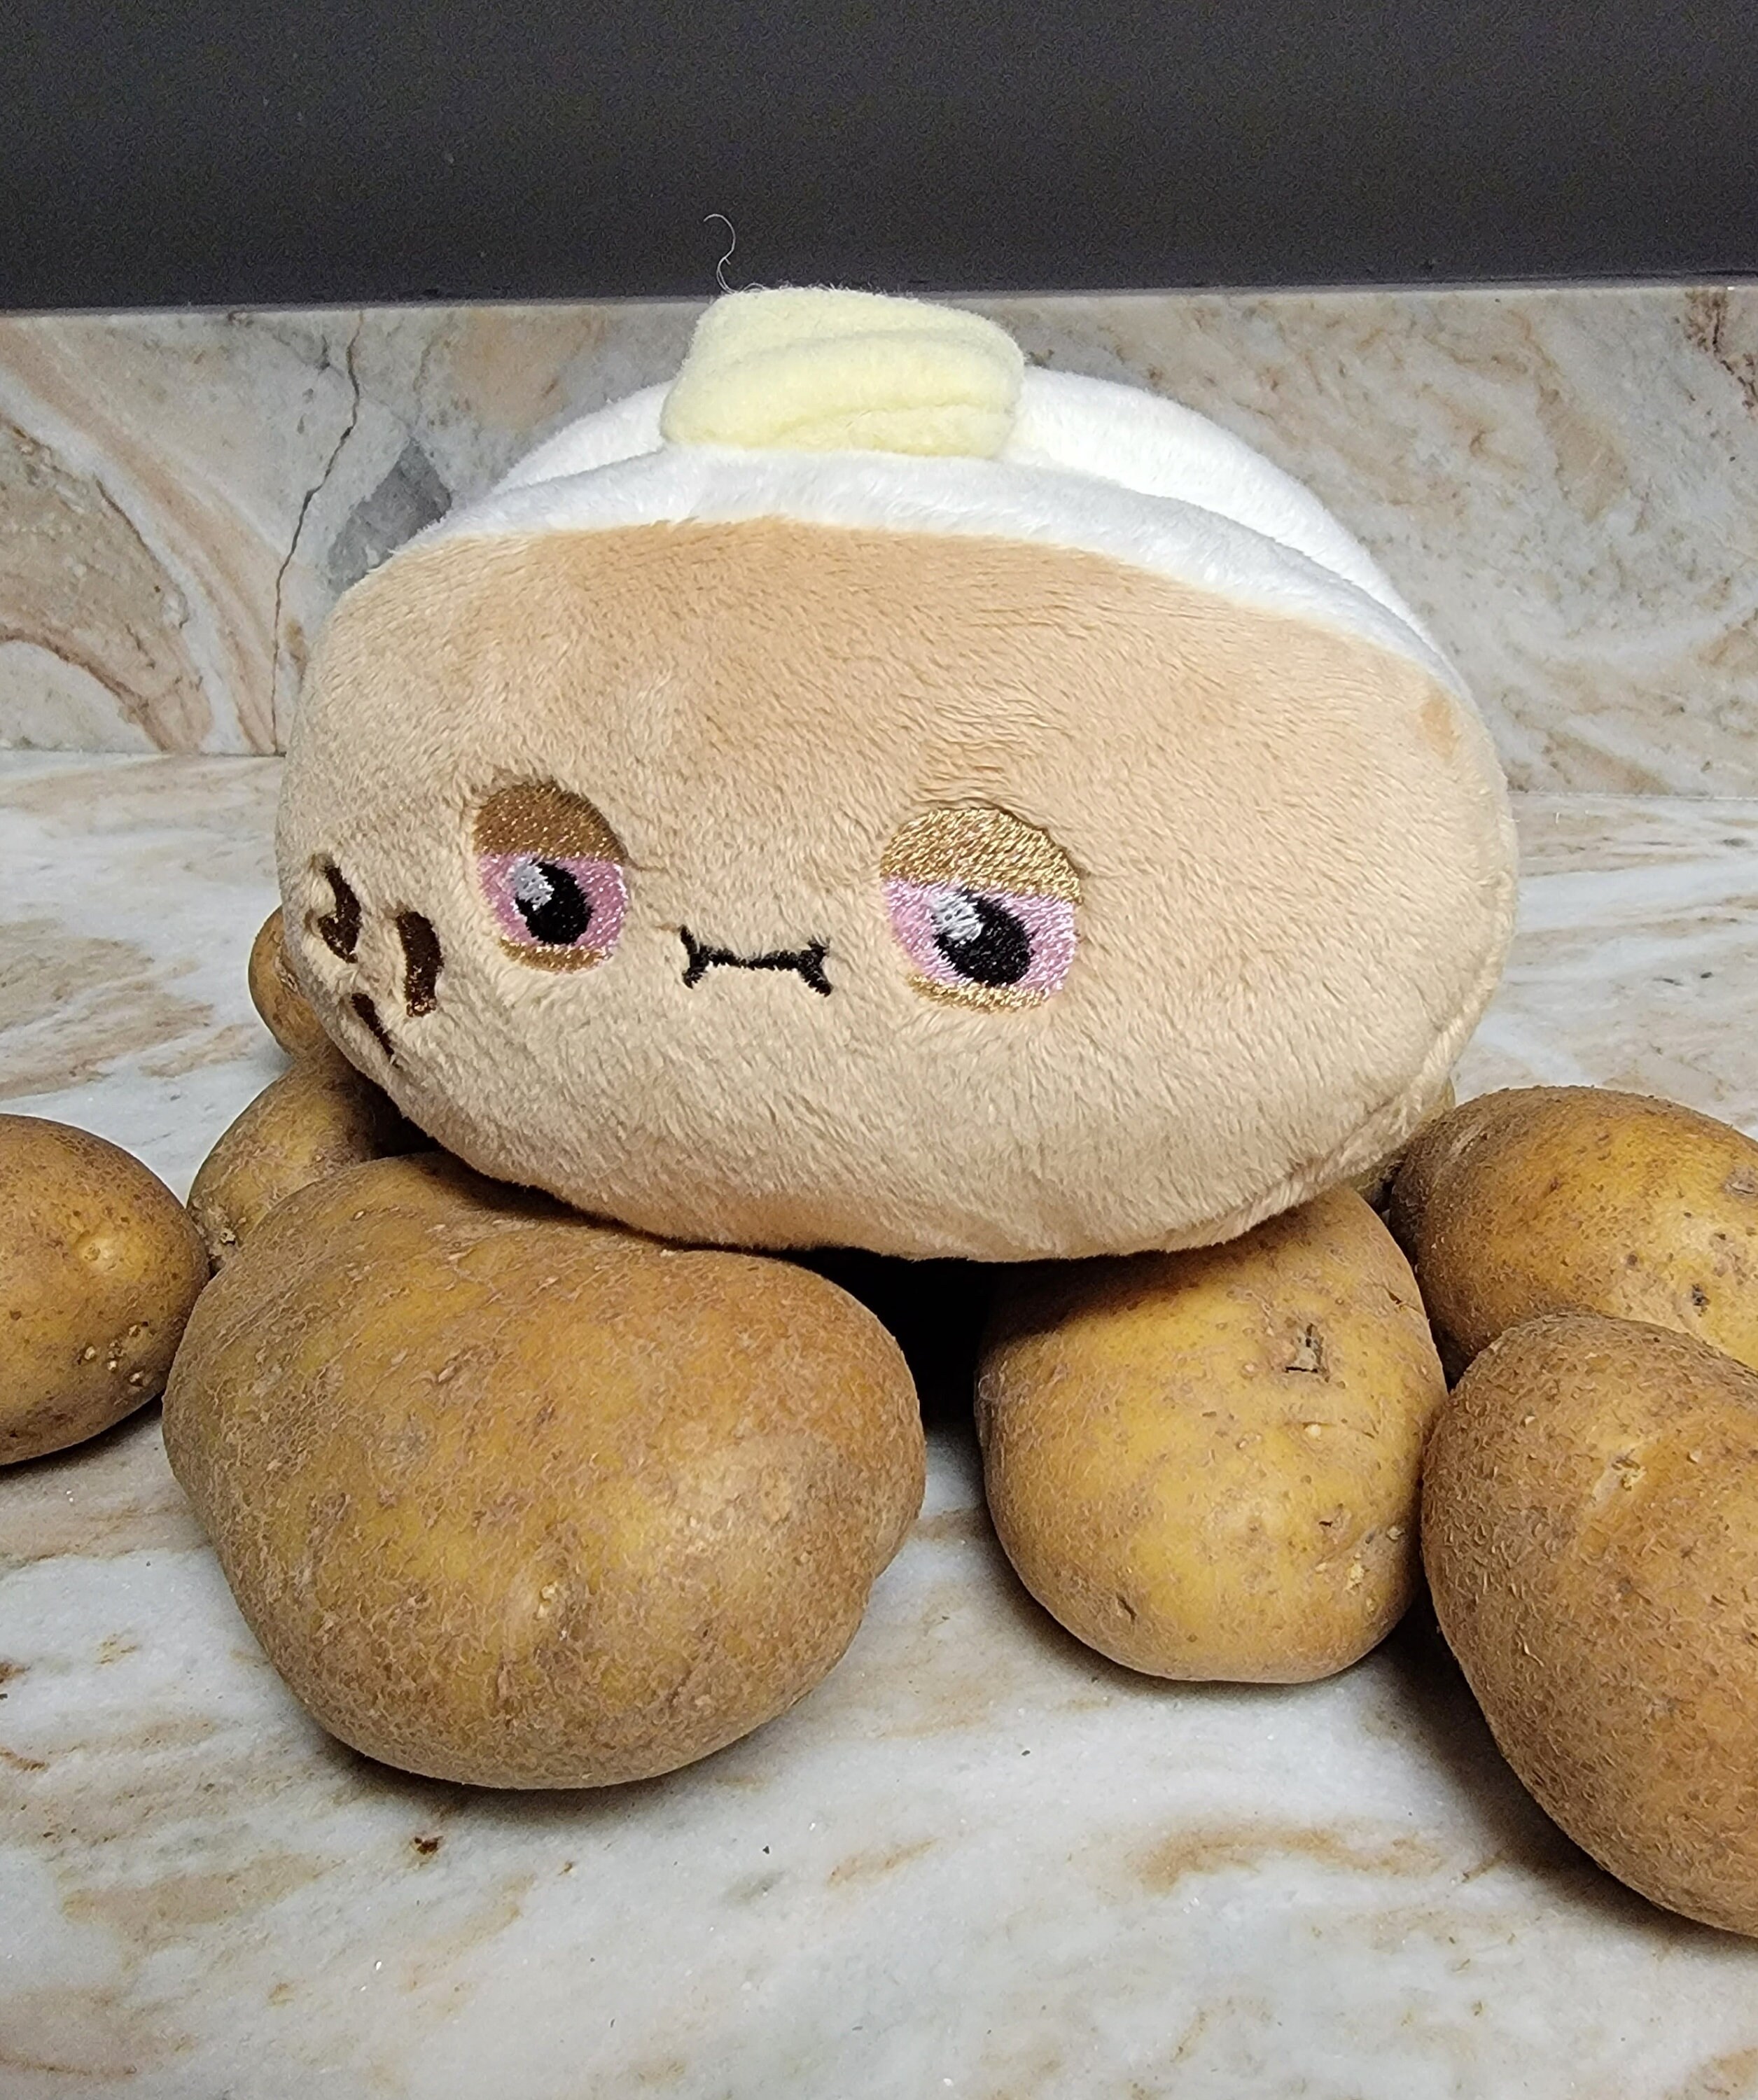 LuLezon Kawaii Potato Plush Soft Toy Comfort Food Stuffed Pillow Plushie  (Medium)